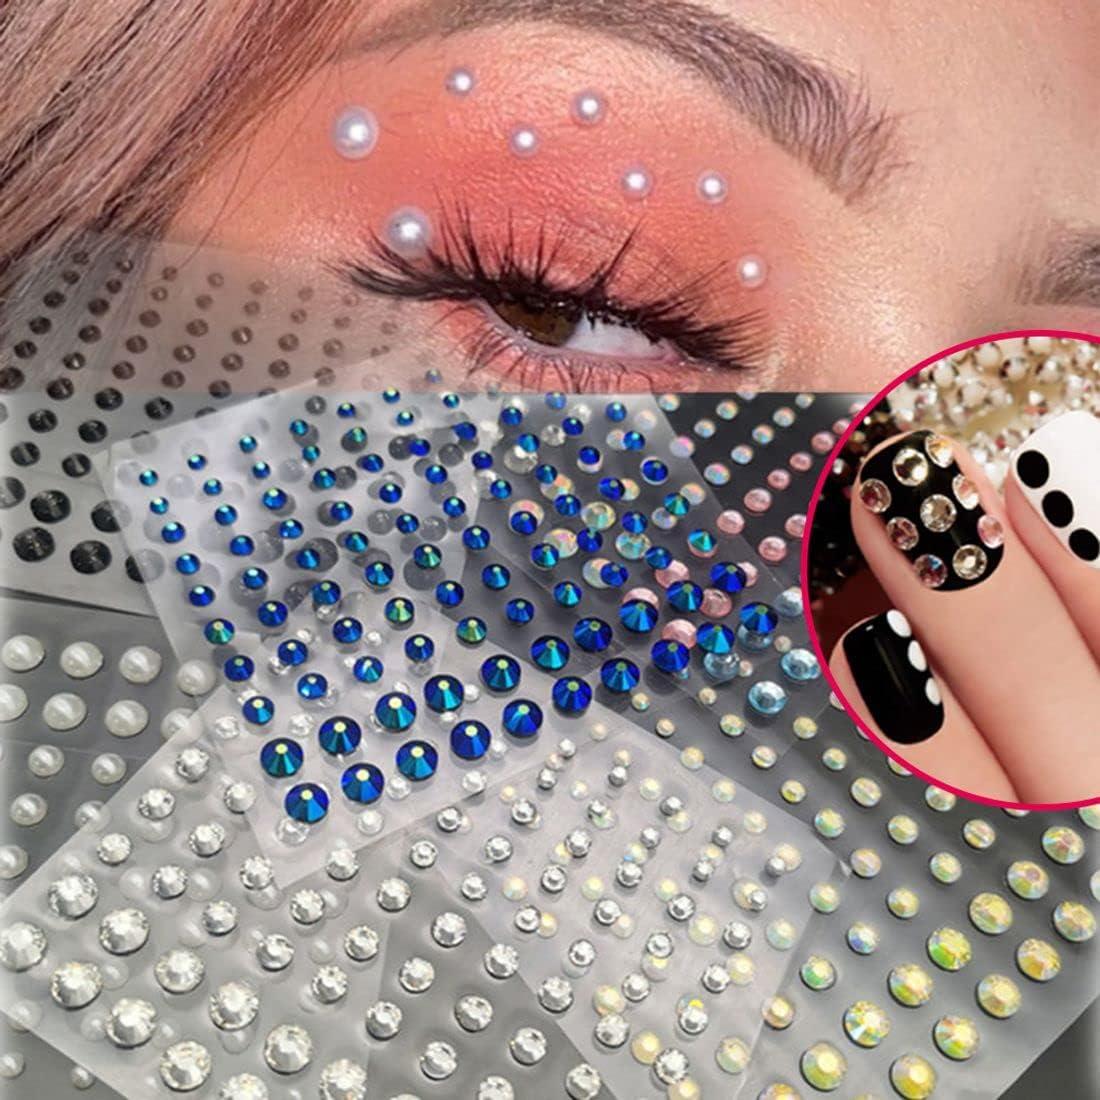 Shiny Makeup Rhinestones Eyebrow Jewelry Sticker ) Face Diamo 3D